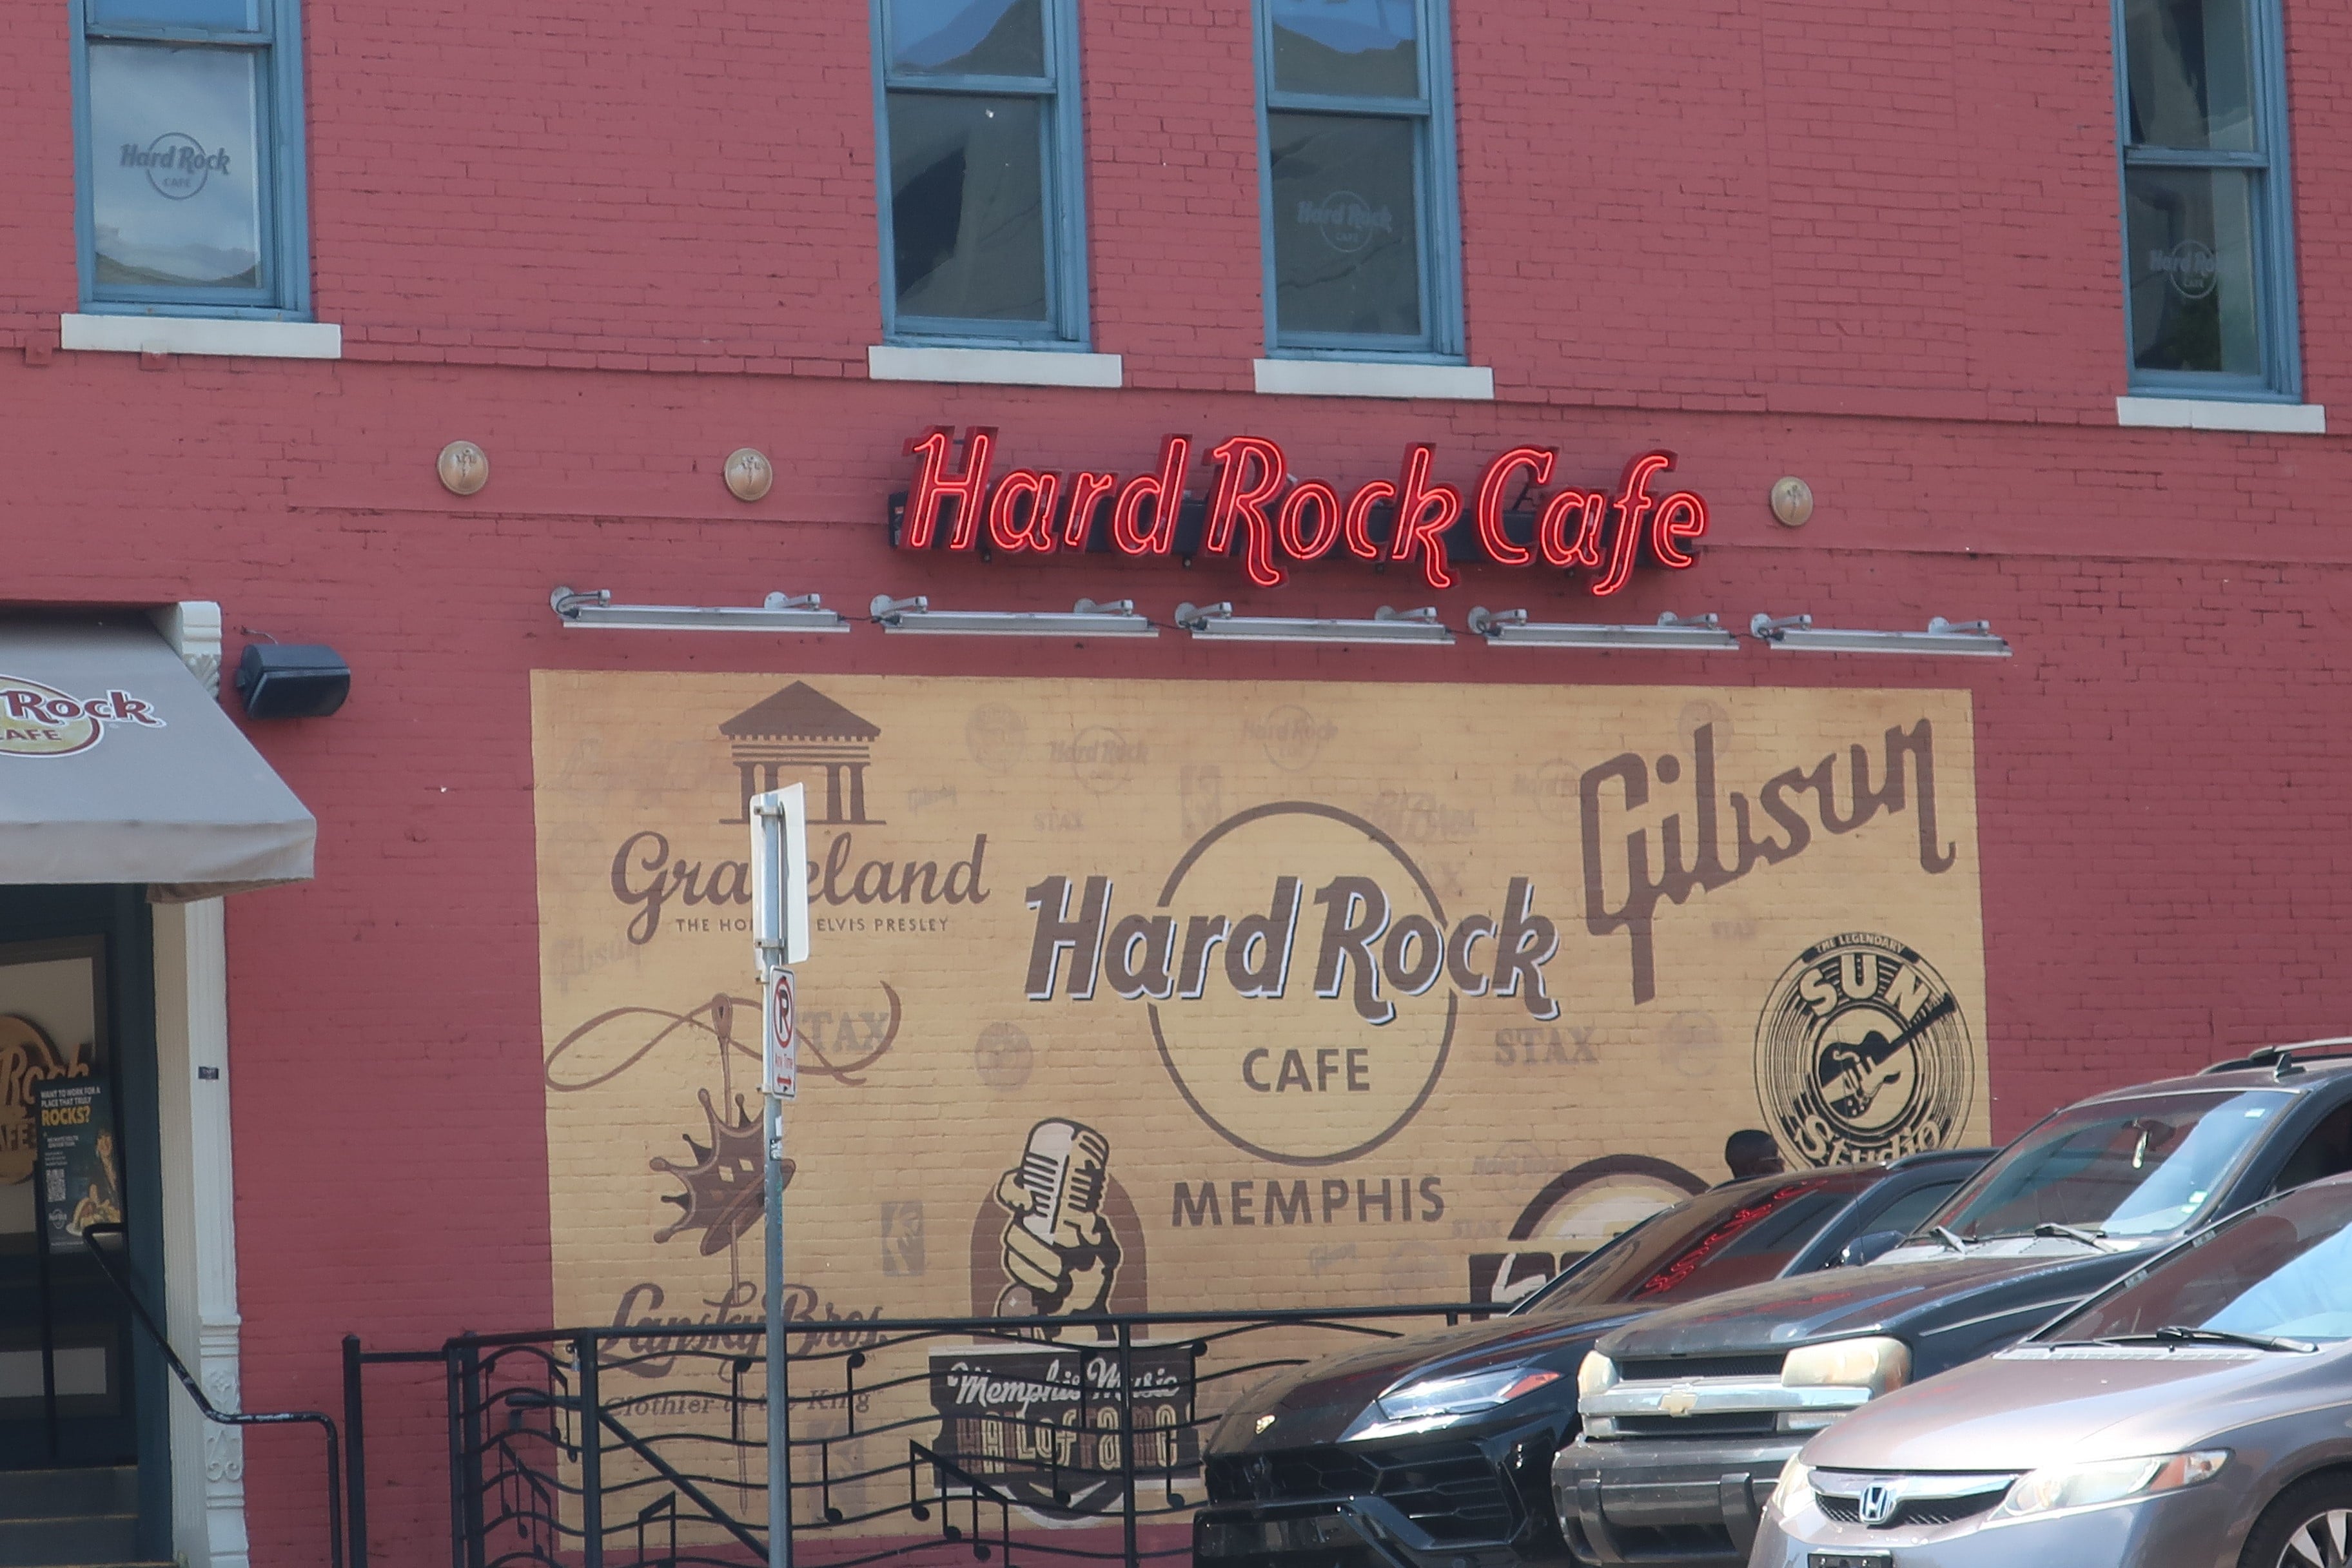 Memphis, Tennessee Beale Street Hard Rock Cafe